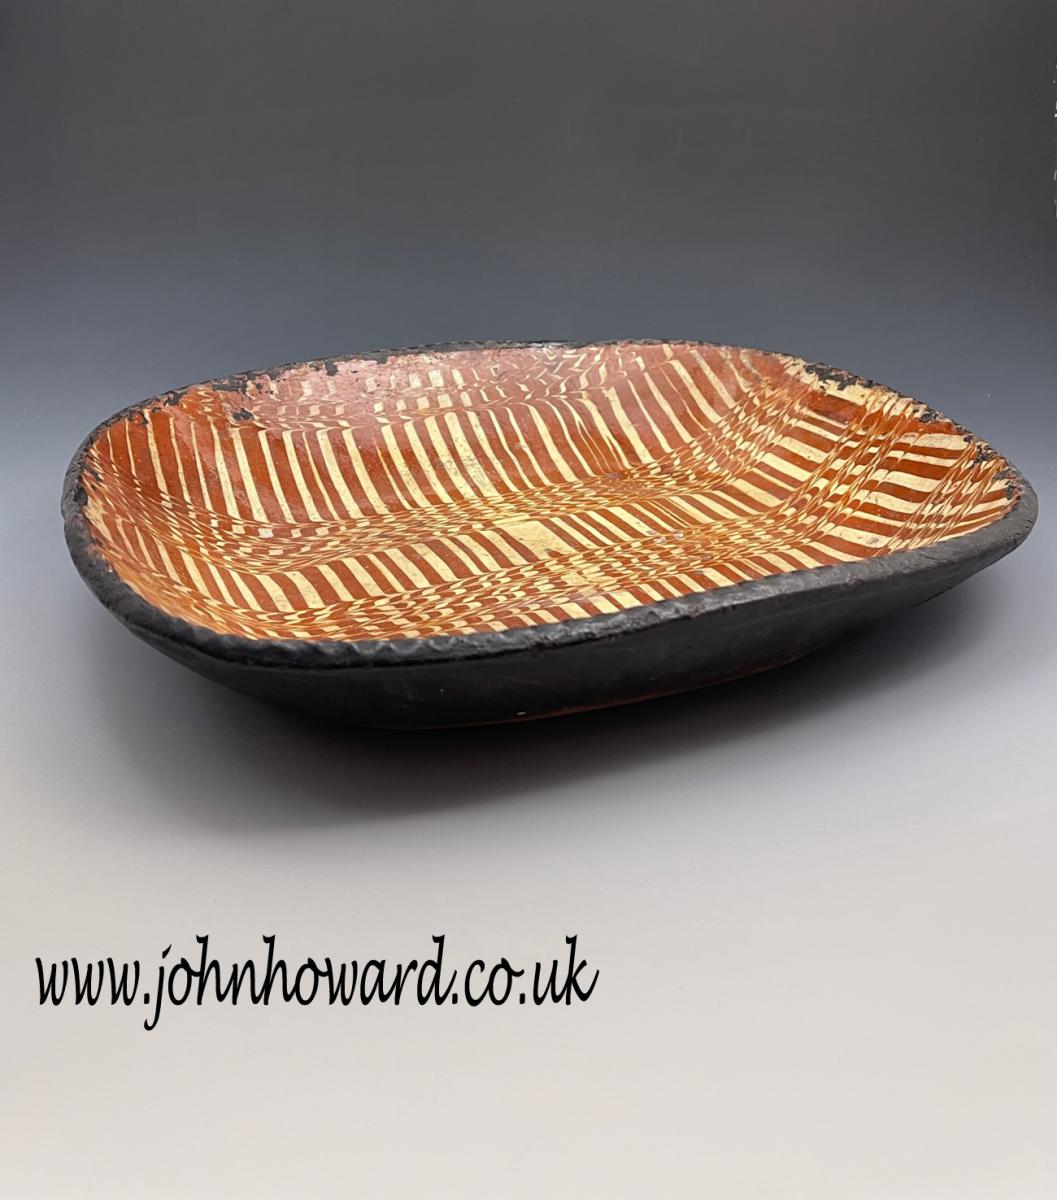 English slipware earthenware baking dish with striking comb decoration late 18th century